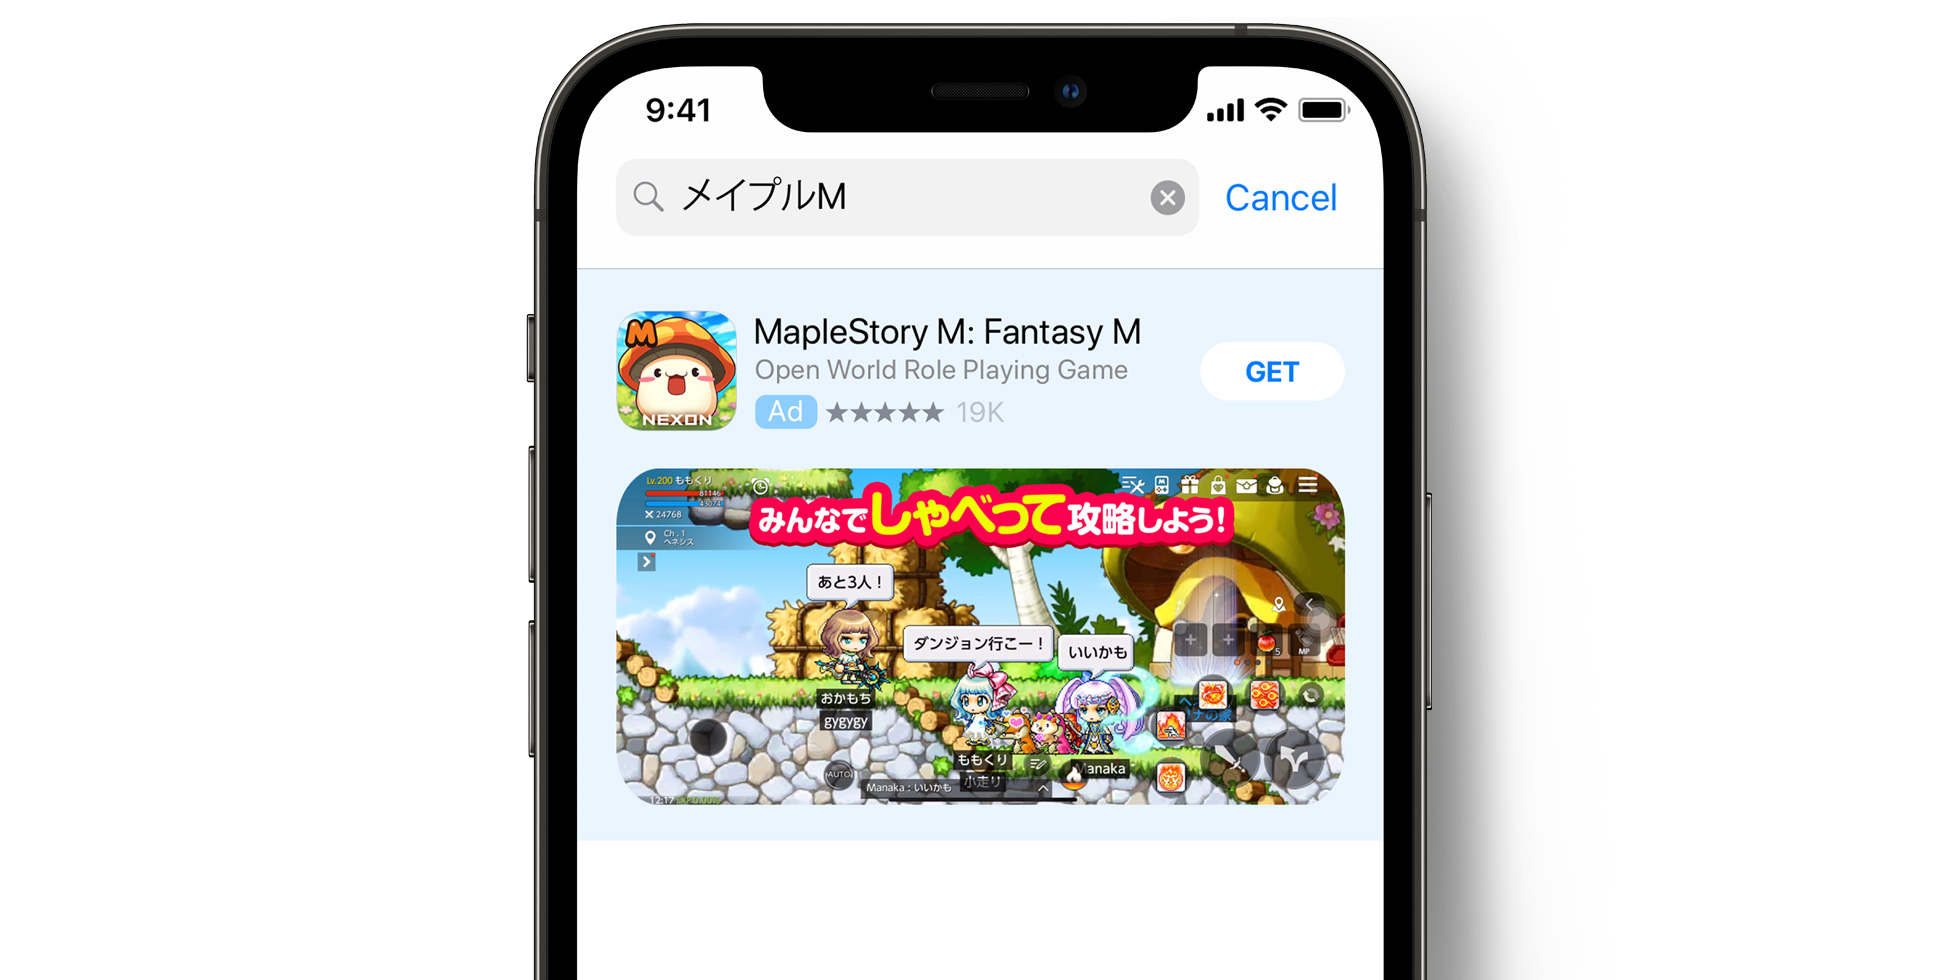 App Store 上的 MapleStory M 广告